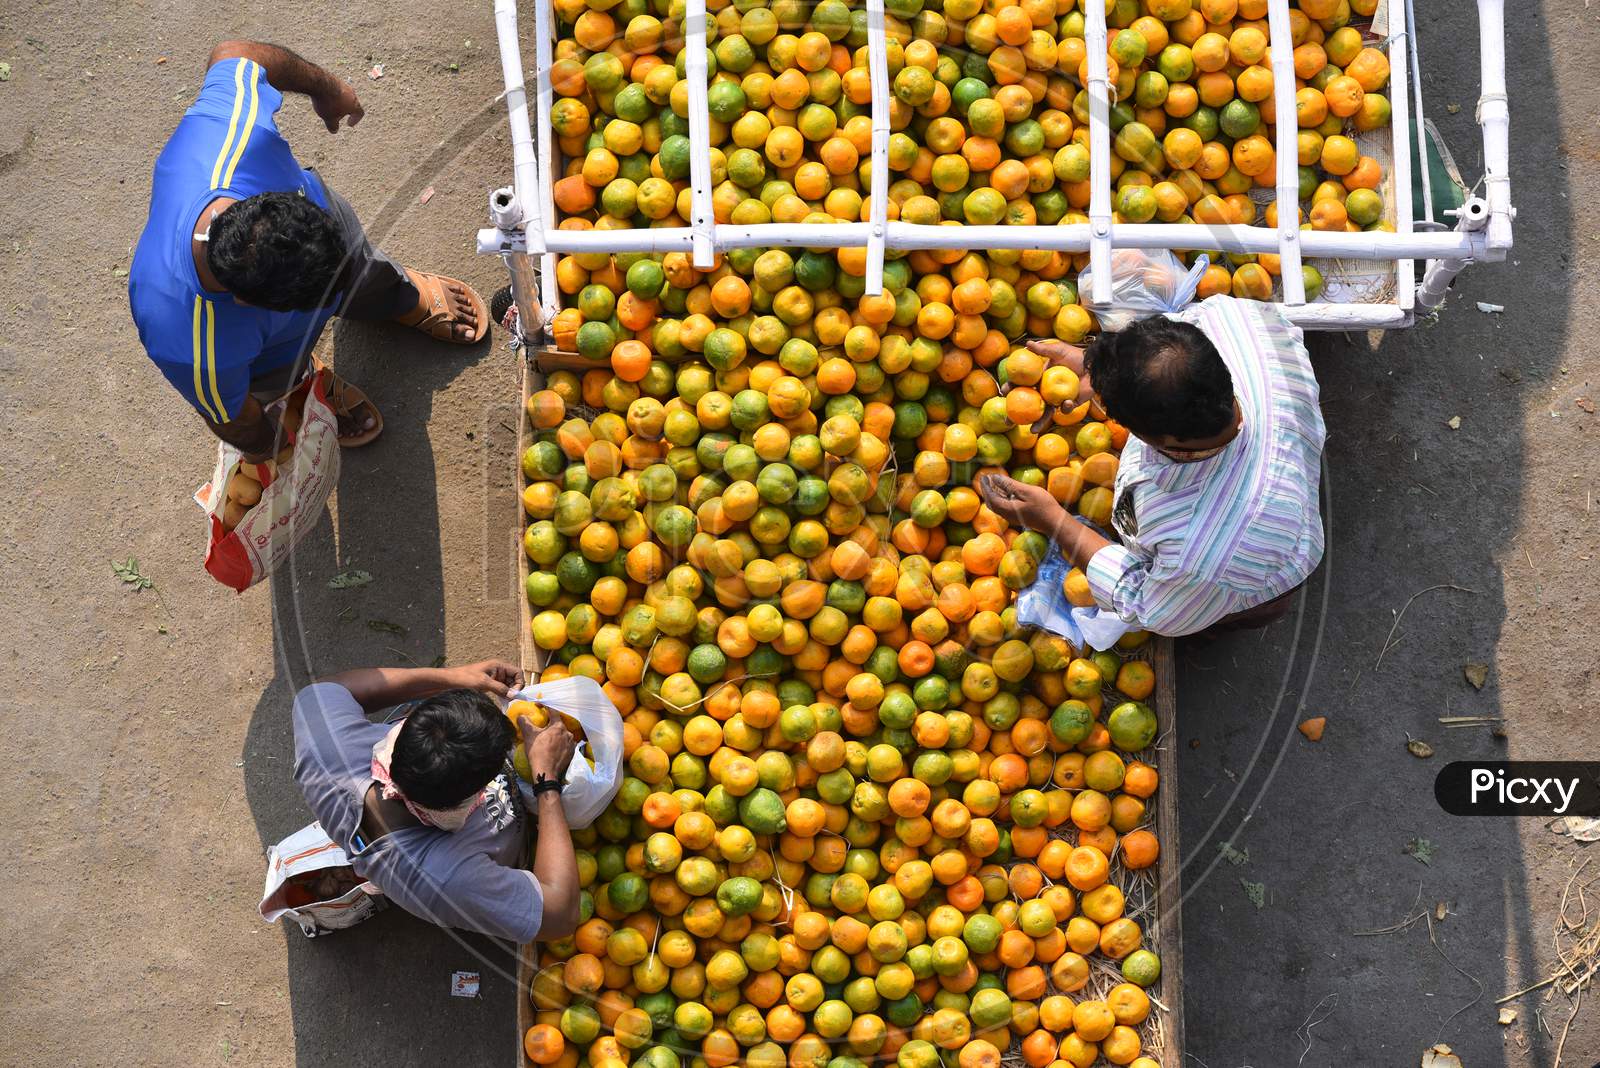 people buy citric acid rich fruits like orange, lemons gain demand amid corona virus outbreak